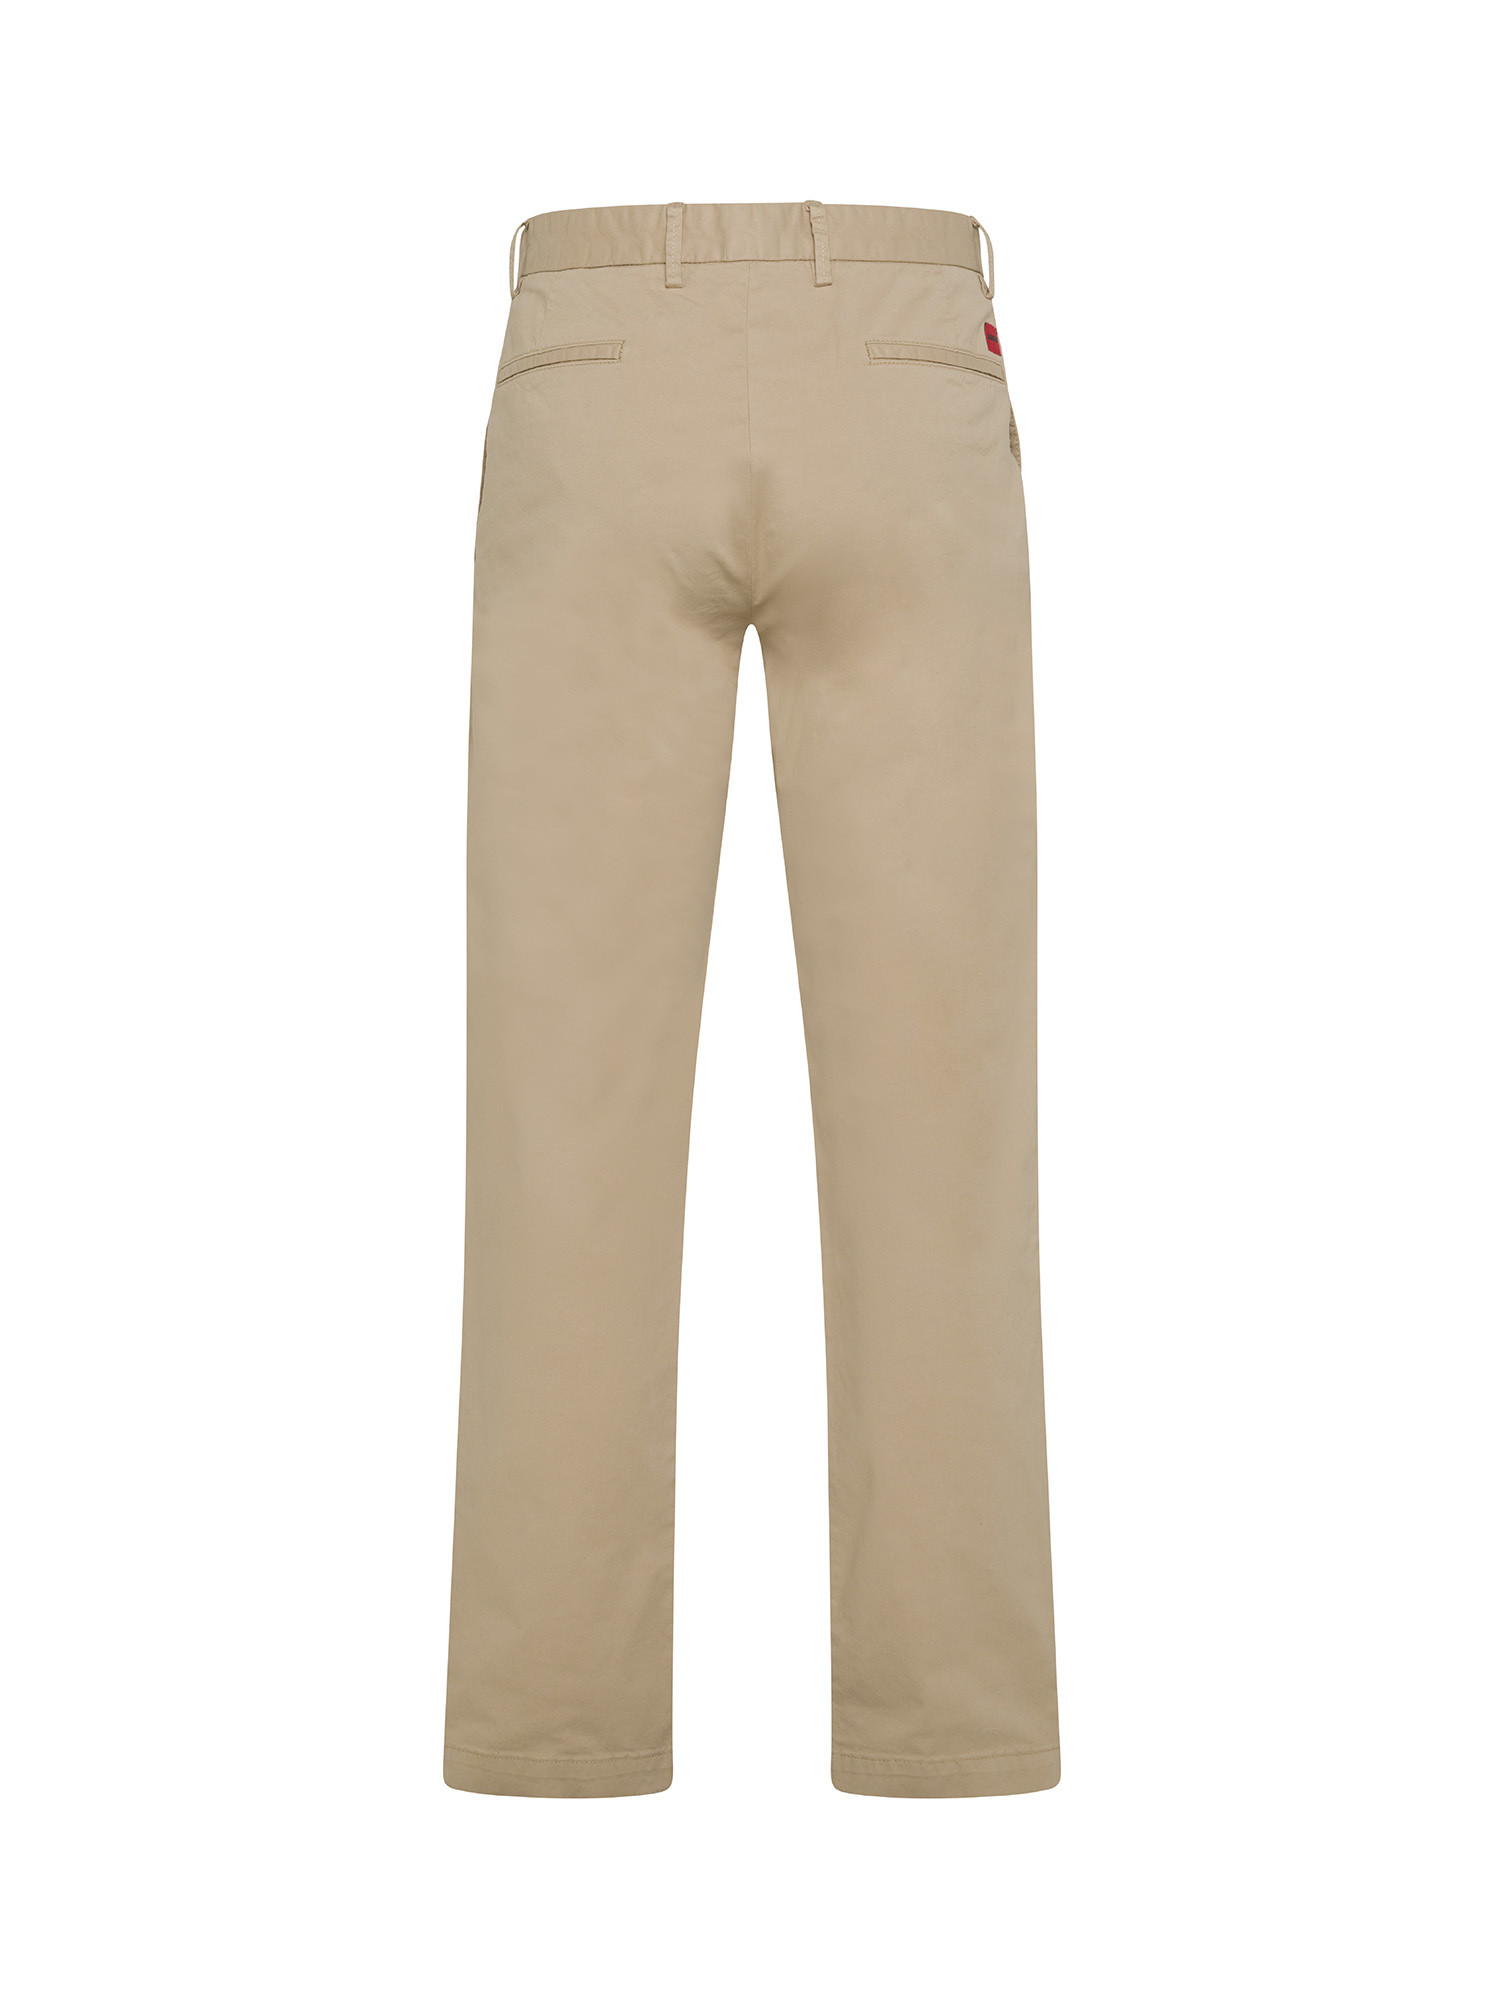 Hugo - Pantaloni chino slim fit, Beige, large image number 1